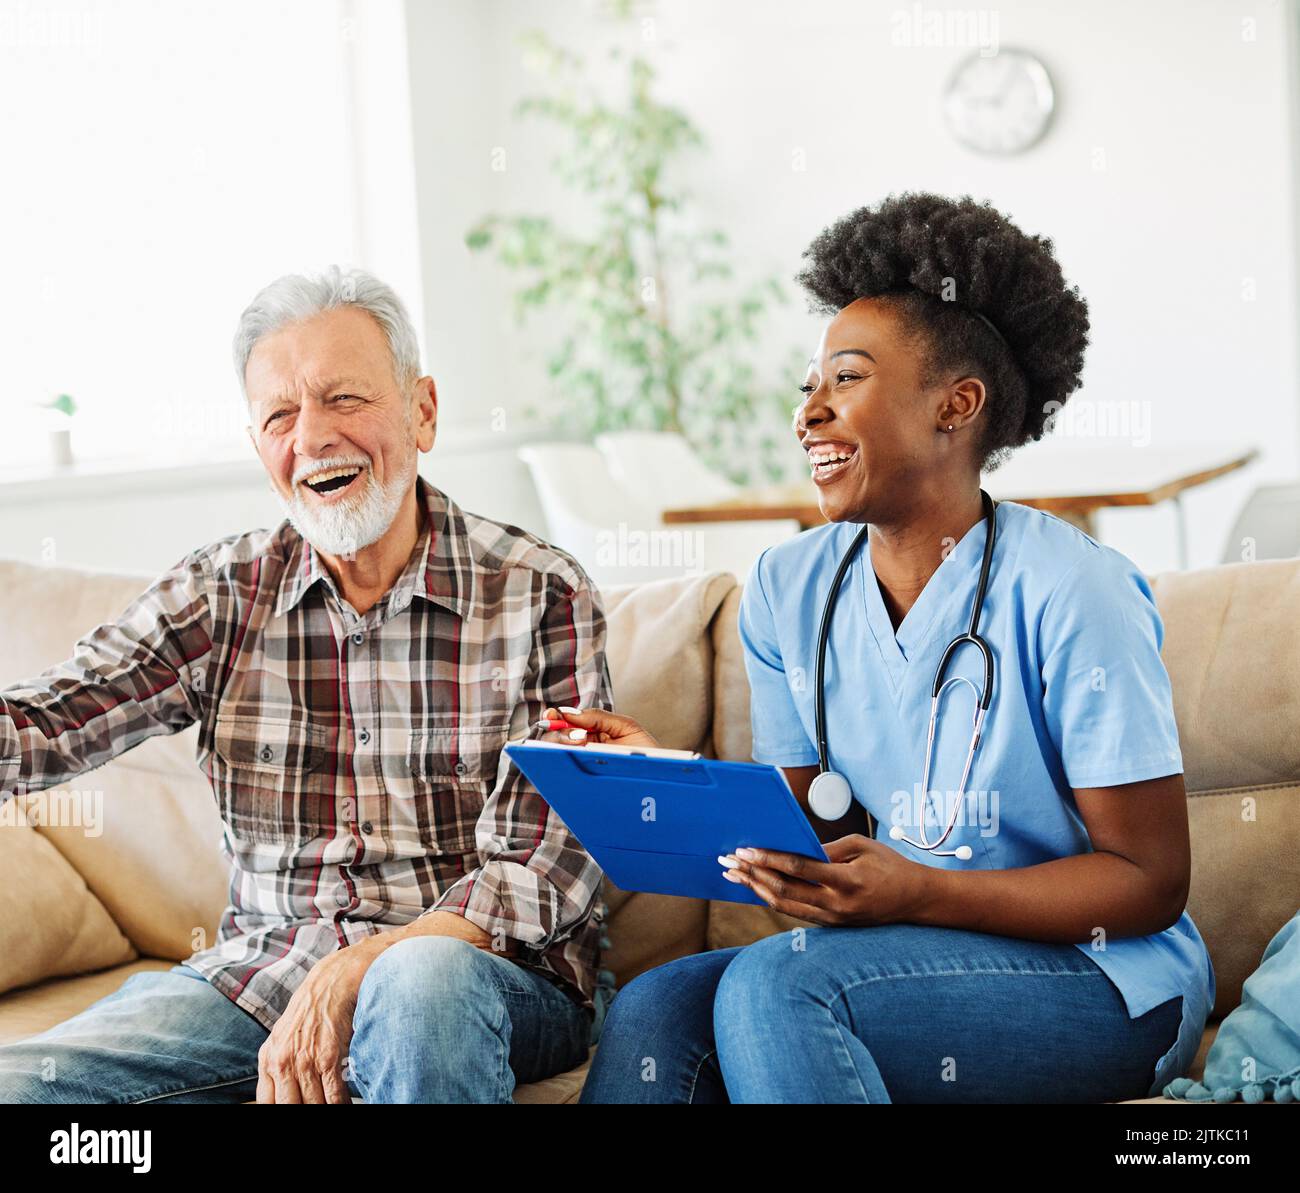 nurse doctor senior care caregiver help assistence retirement home nursing elderly man woman health support african american black Stock Photo